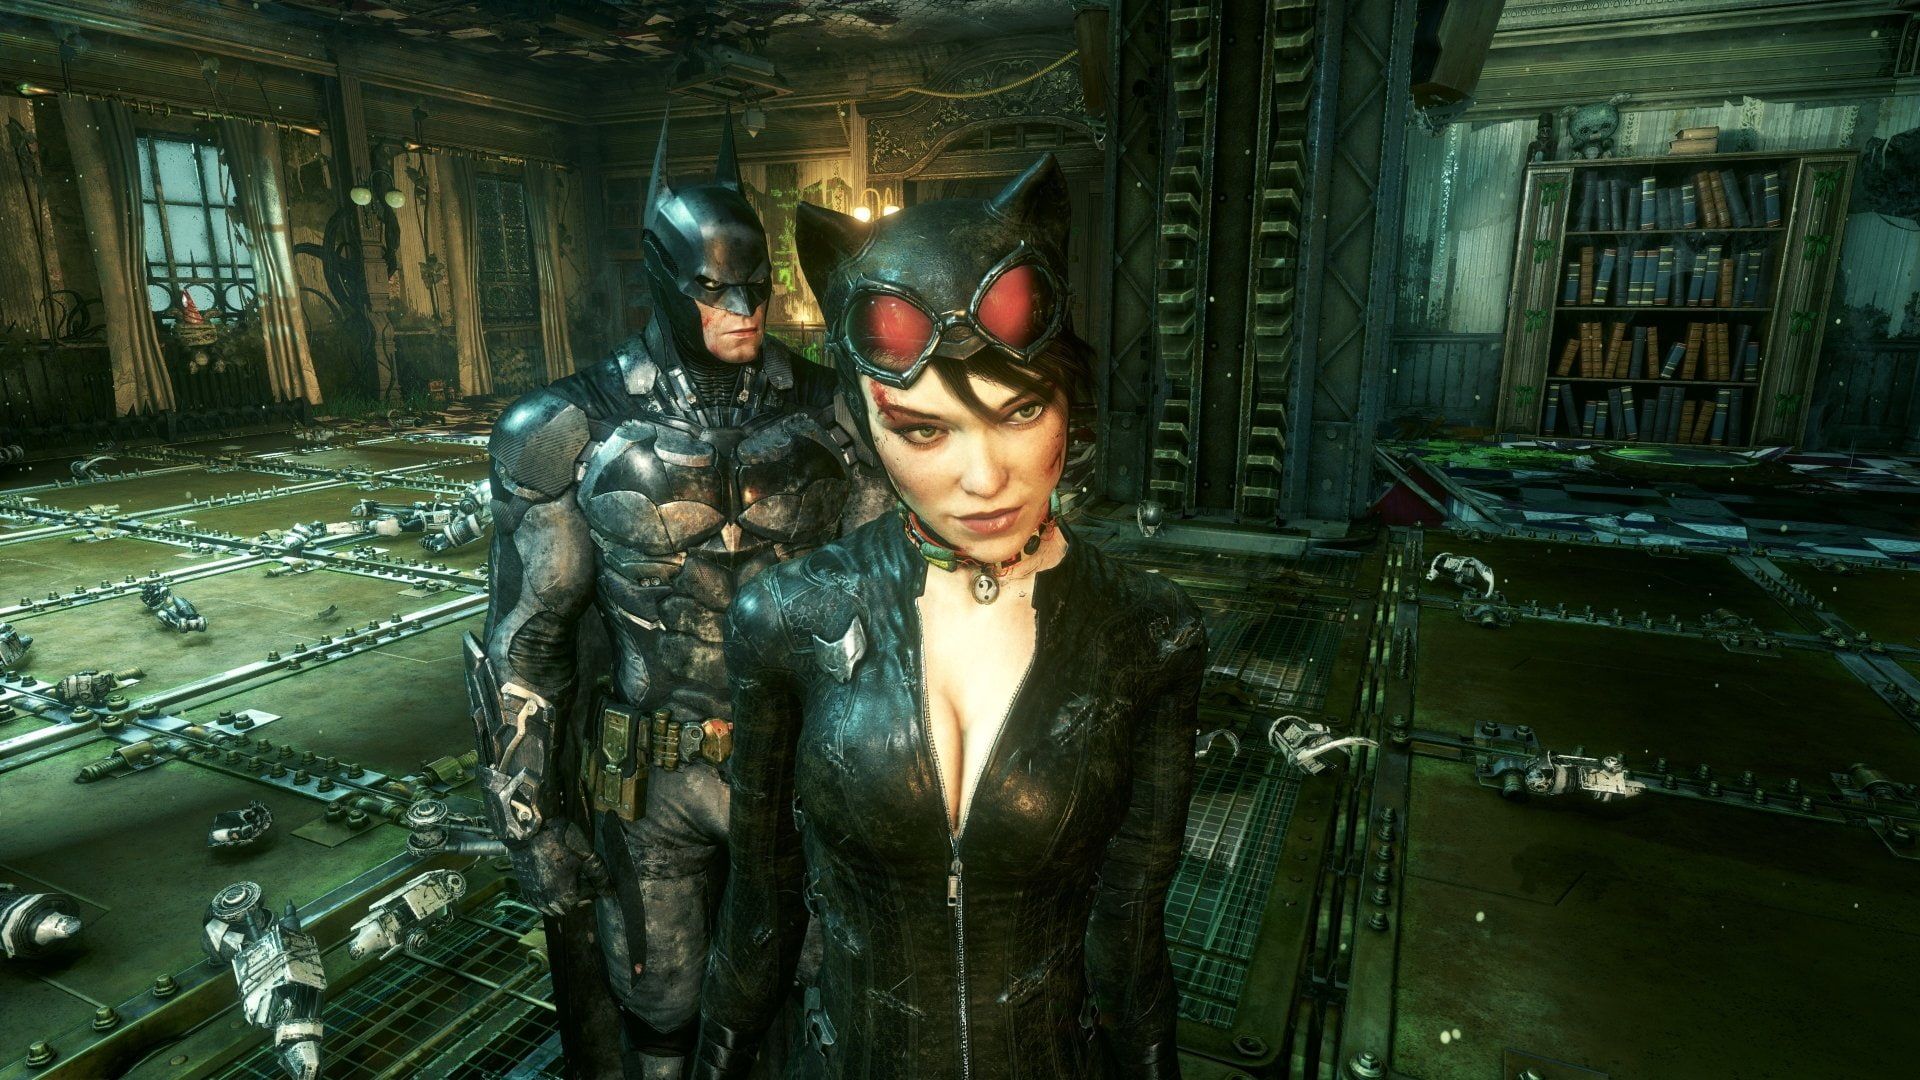 Batman Batman: Arkham Knight #Catwoman P #wallpaper #hdwallpaper #desktop. Catwoman, Arkham knight, Batman